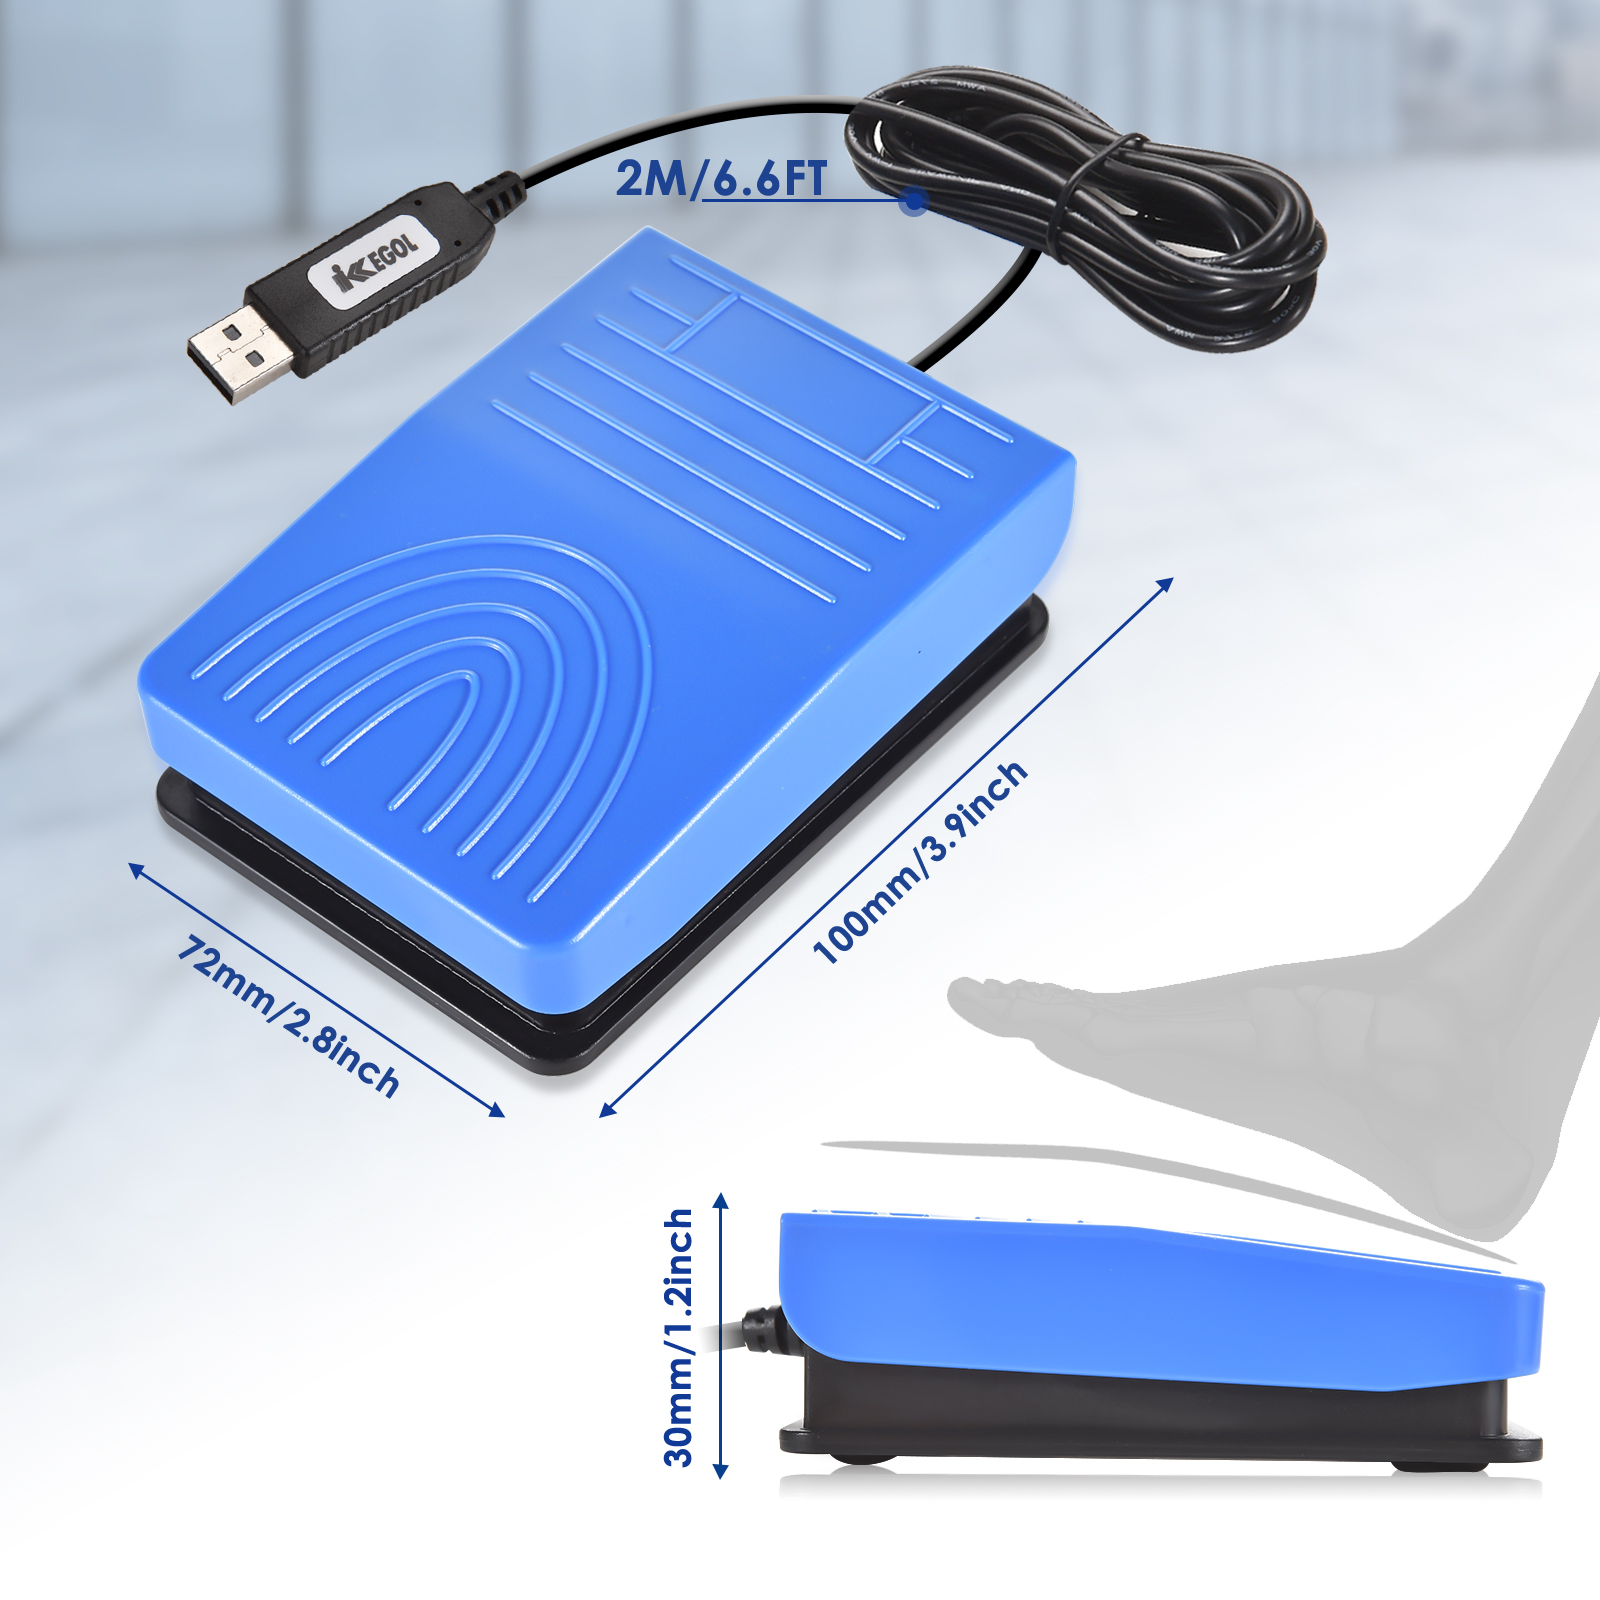 iKKEGOL USB Blue Pedal Foot Program Switch